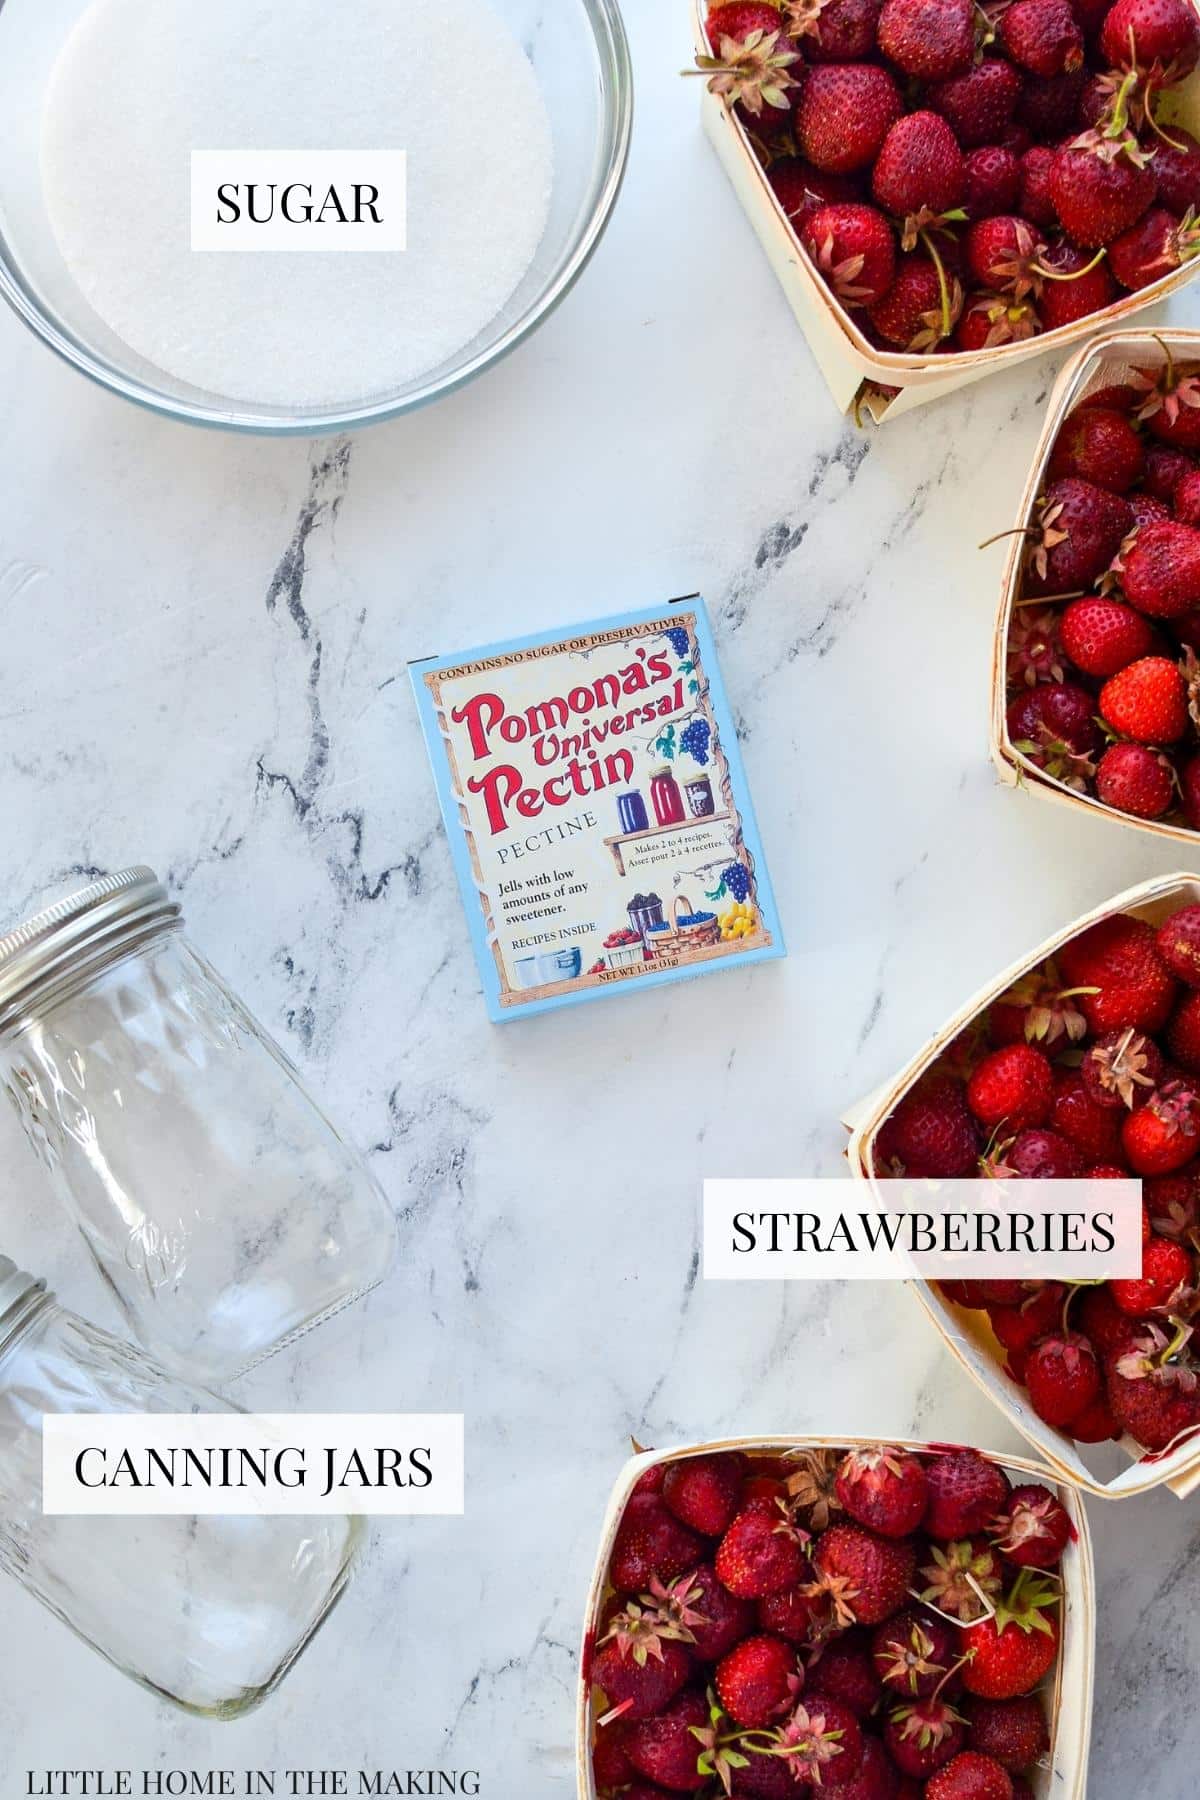 The ingredients needed to make low sugar strawberry jam: strawberries, sugar, and universal pectin.